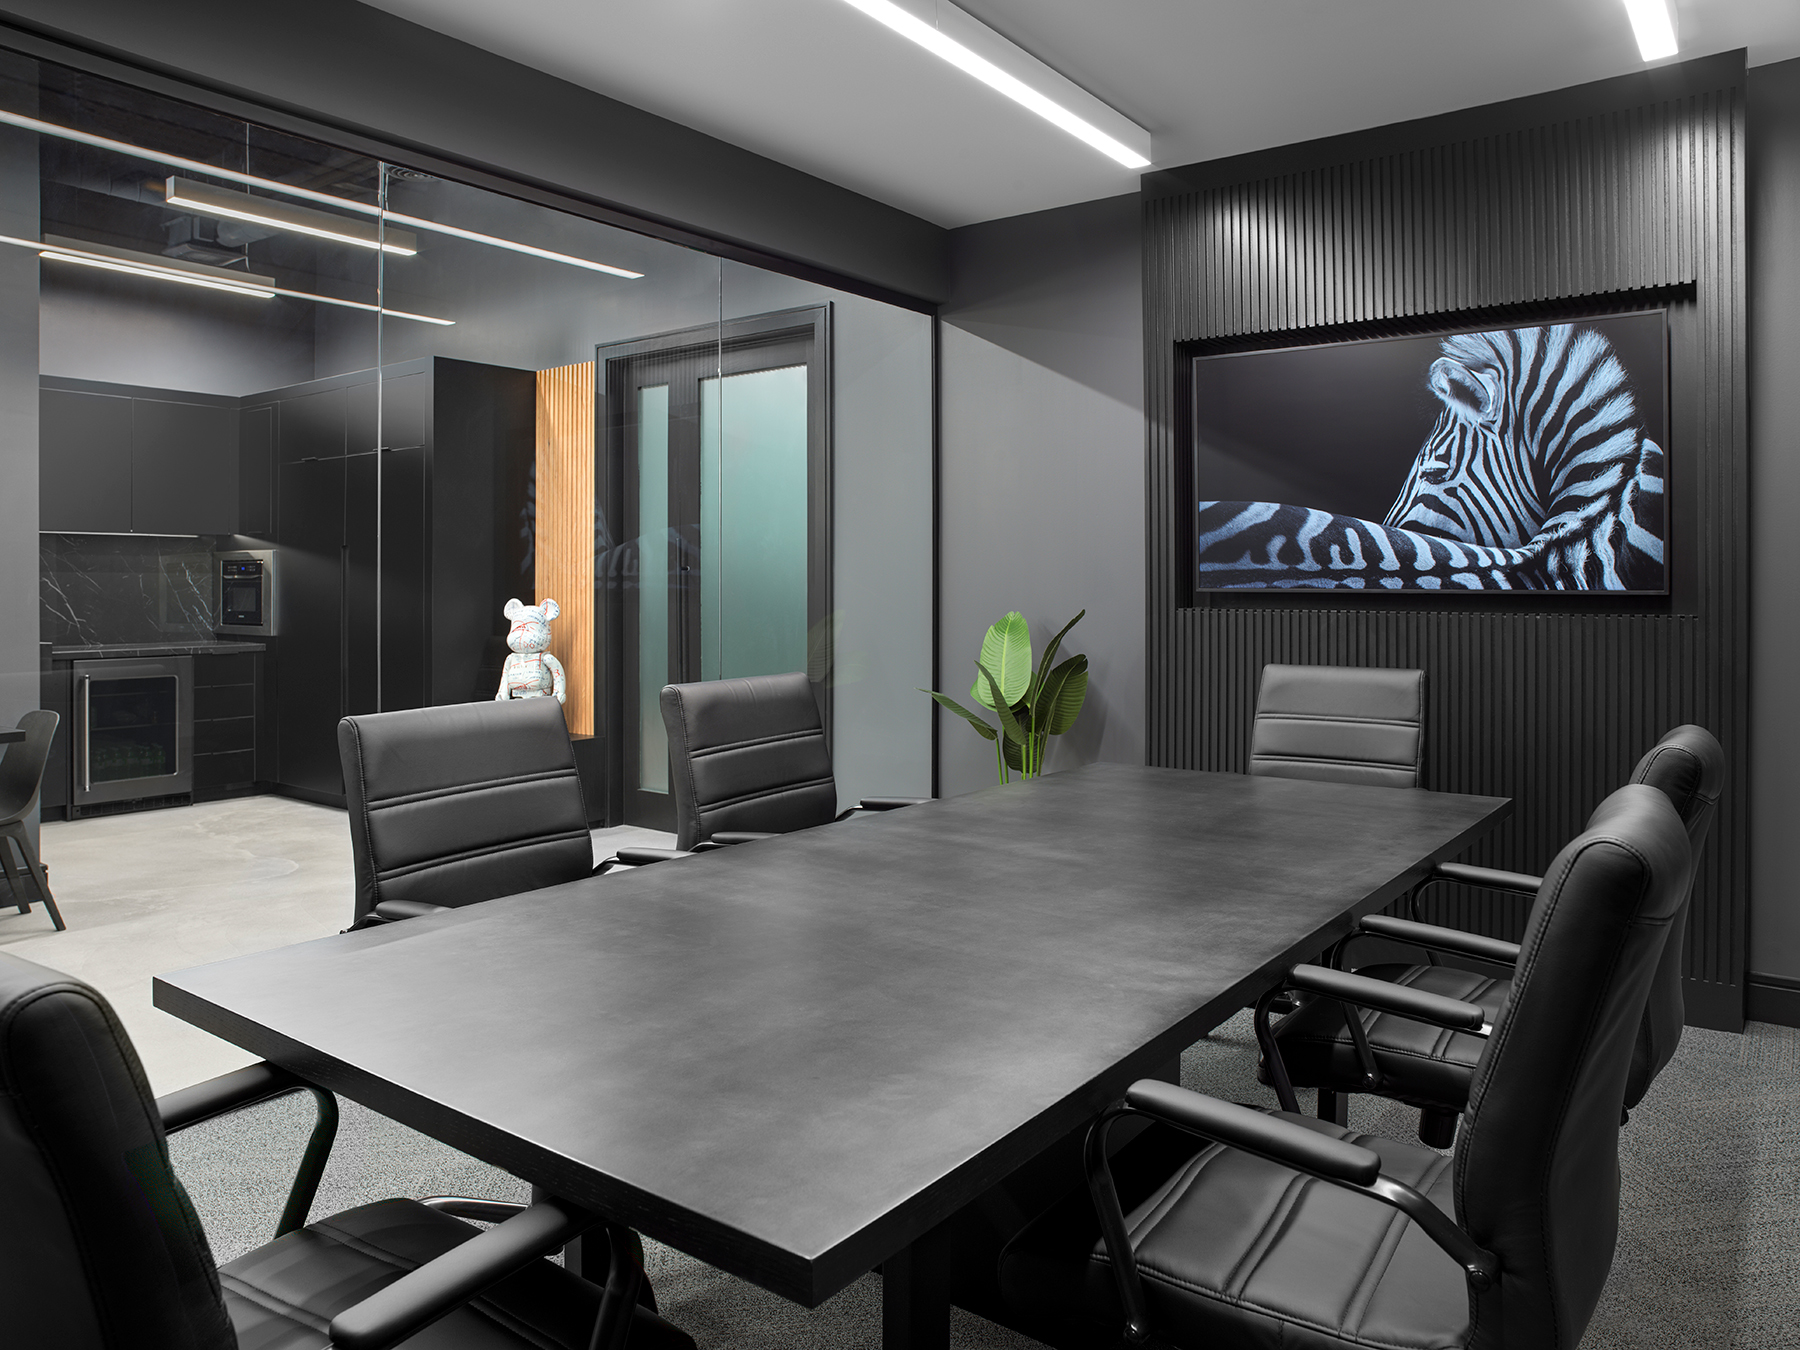 Corporate interior design services in Toronto